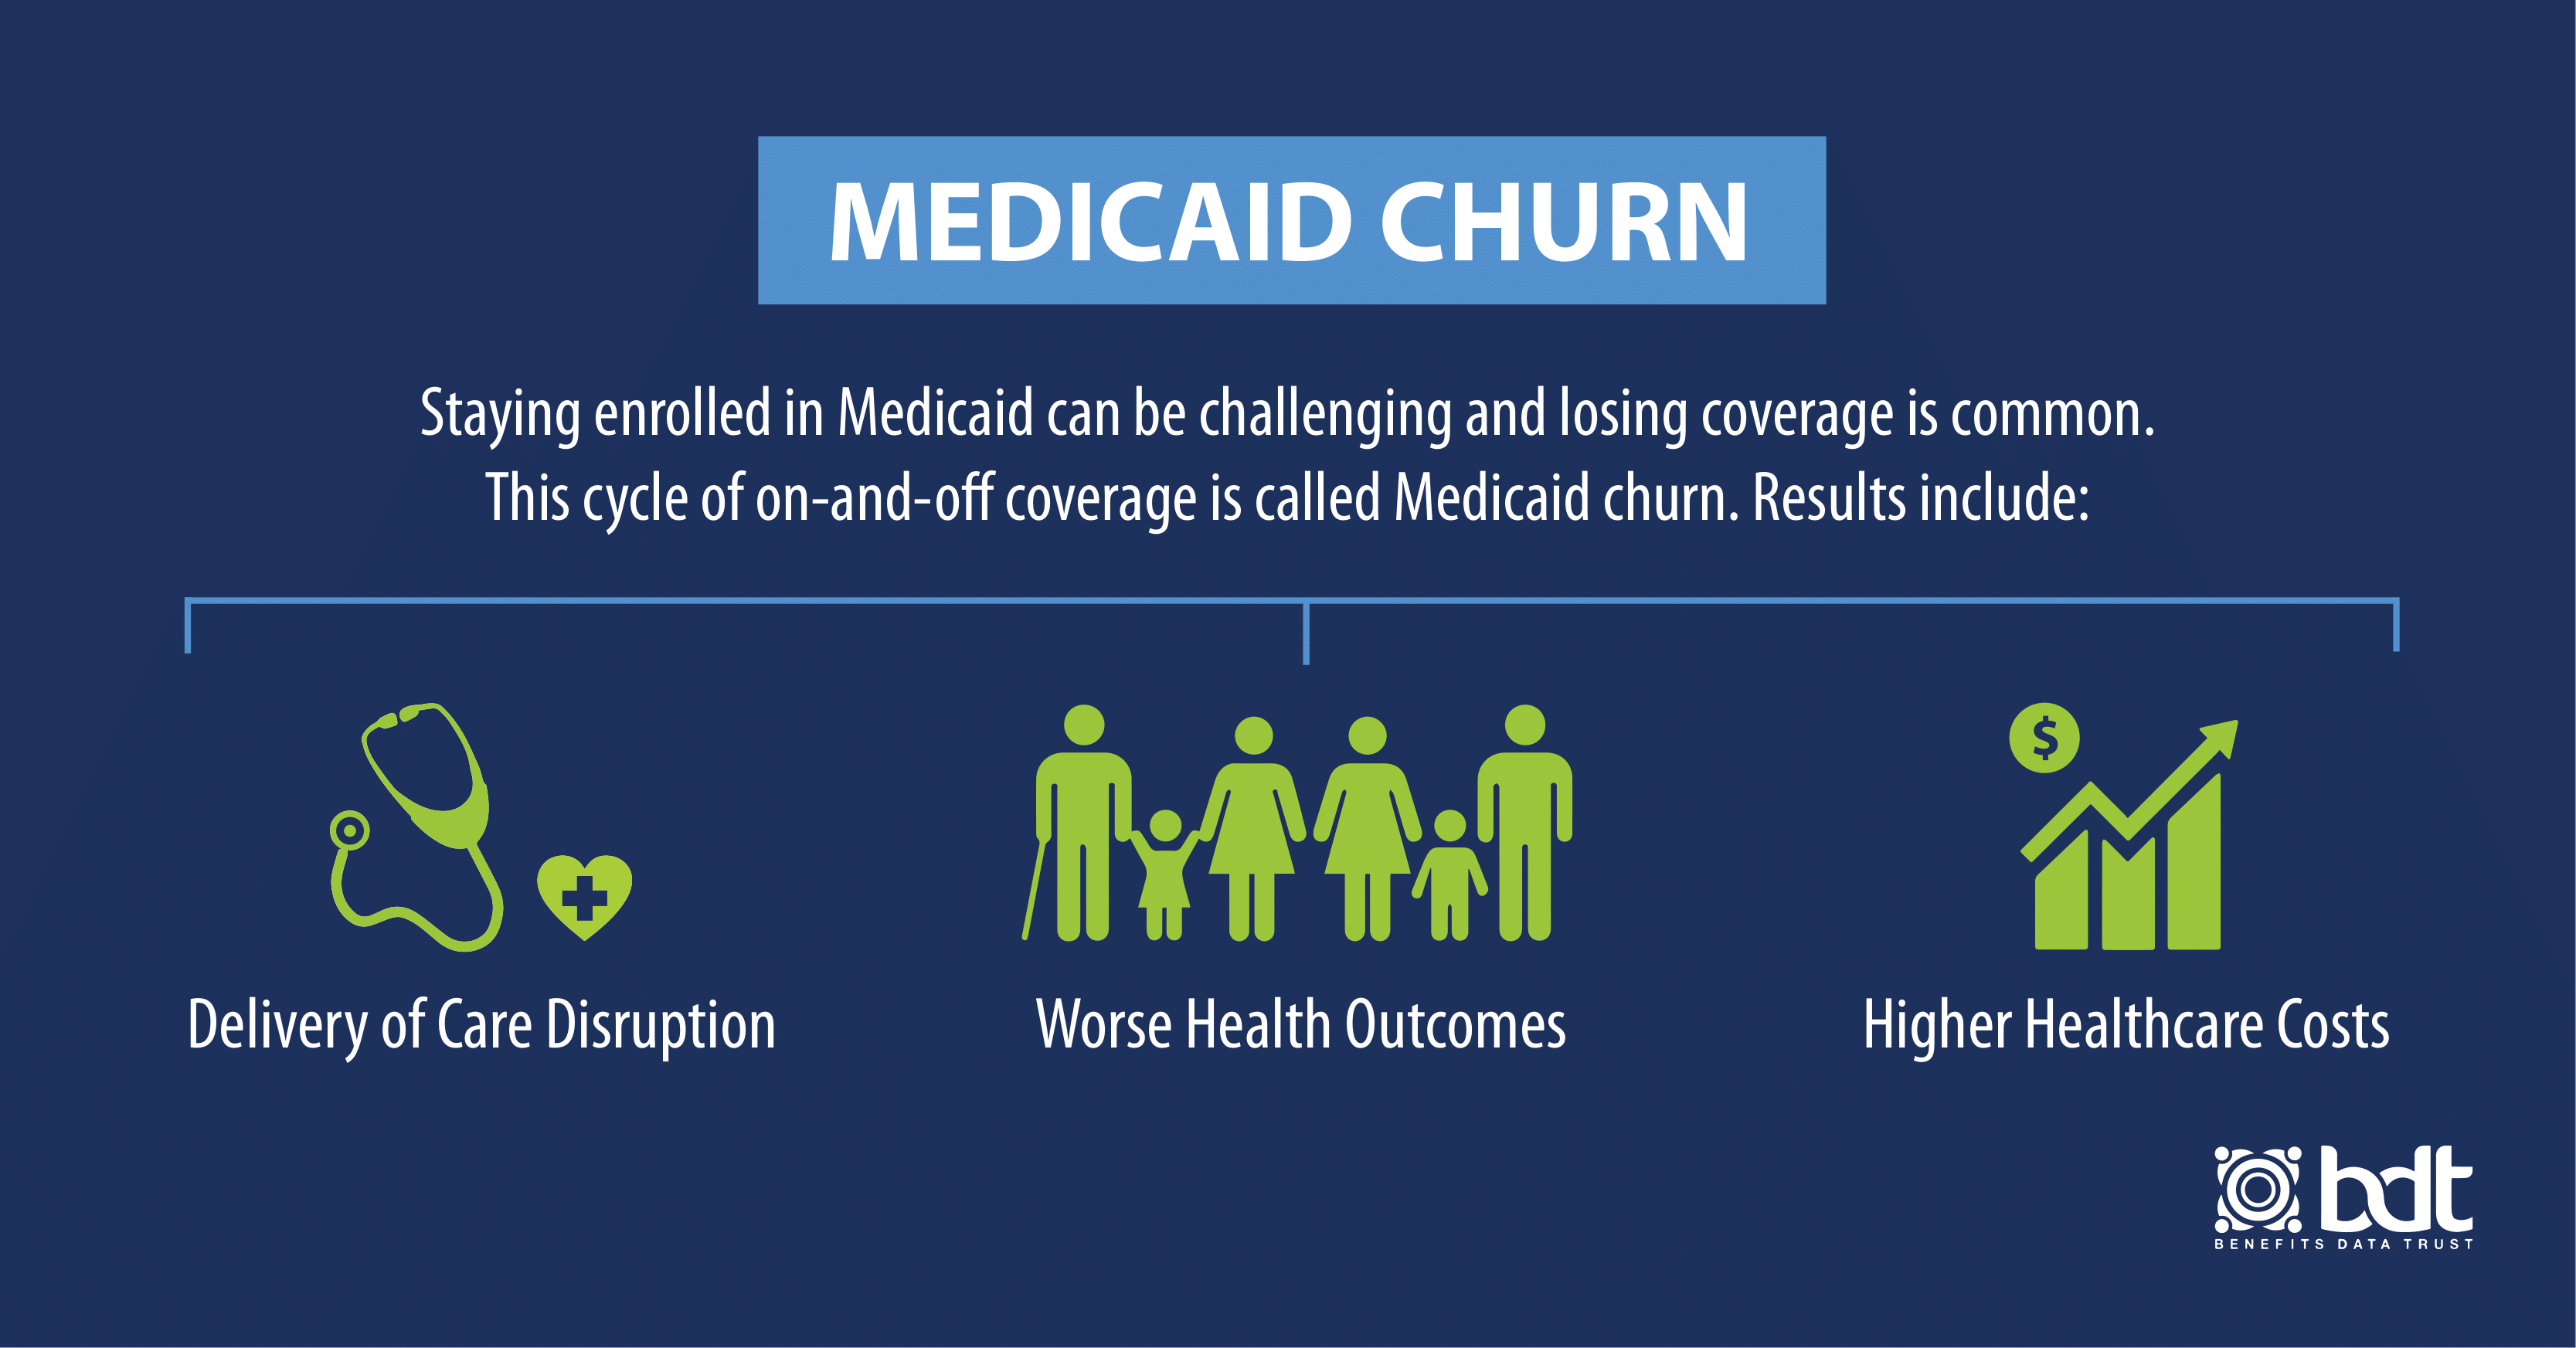 Medicaid Churn graphic